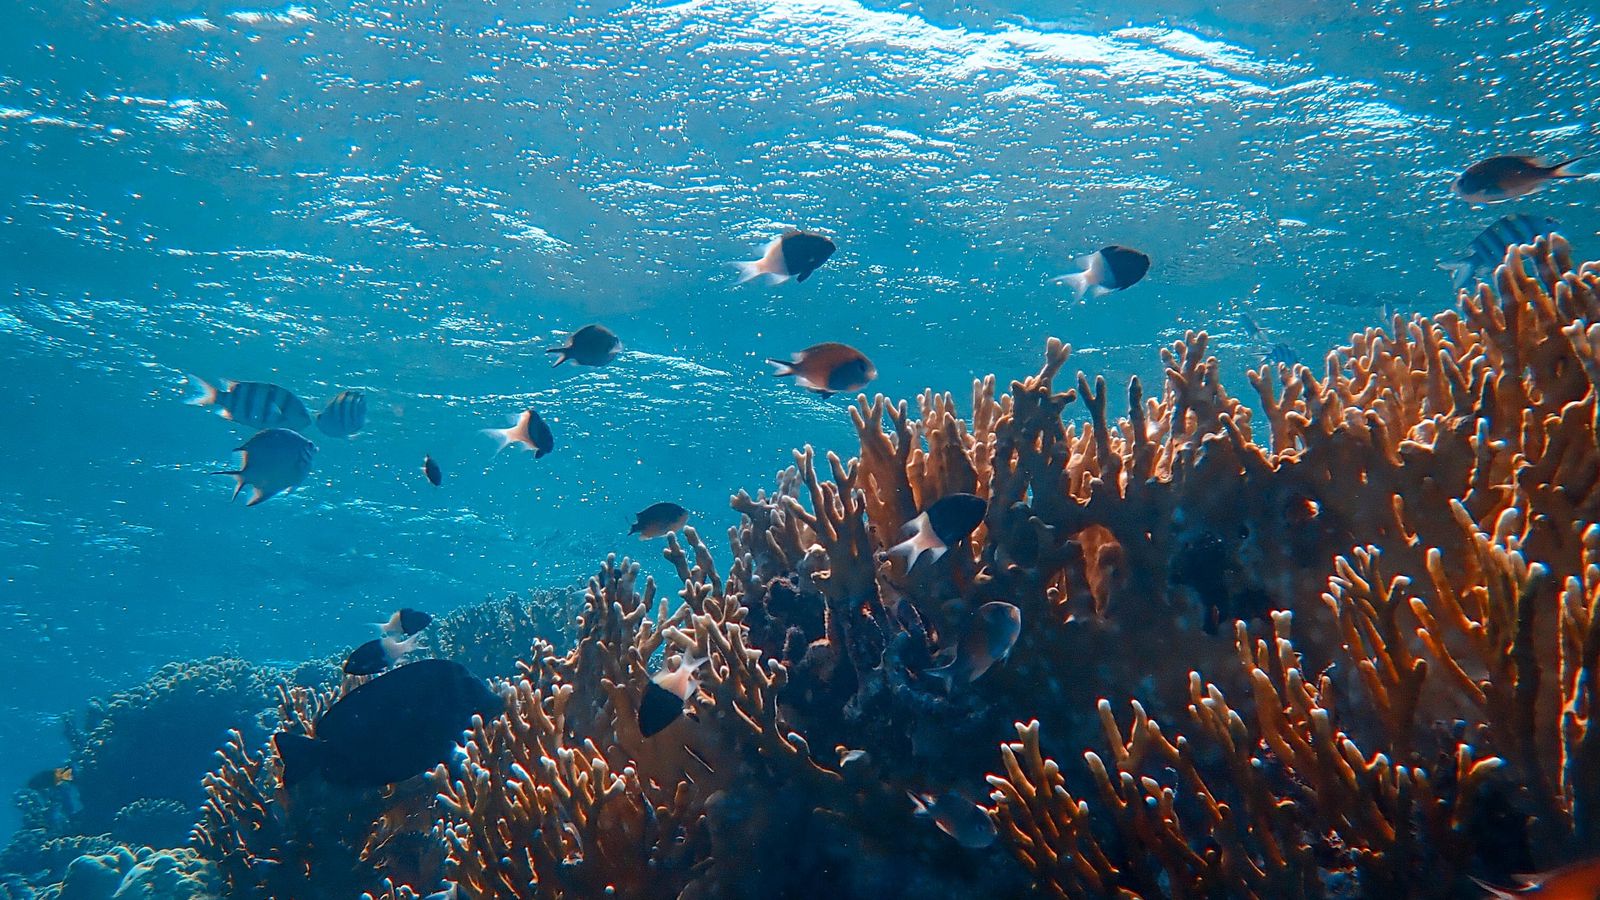 Download wallpaper 1600x900 underwater world, ocean, fish, corals, algae  widescreen 16:9 hd background